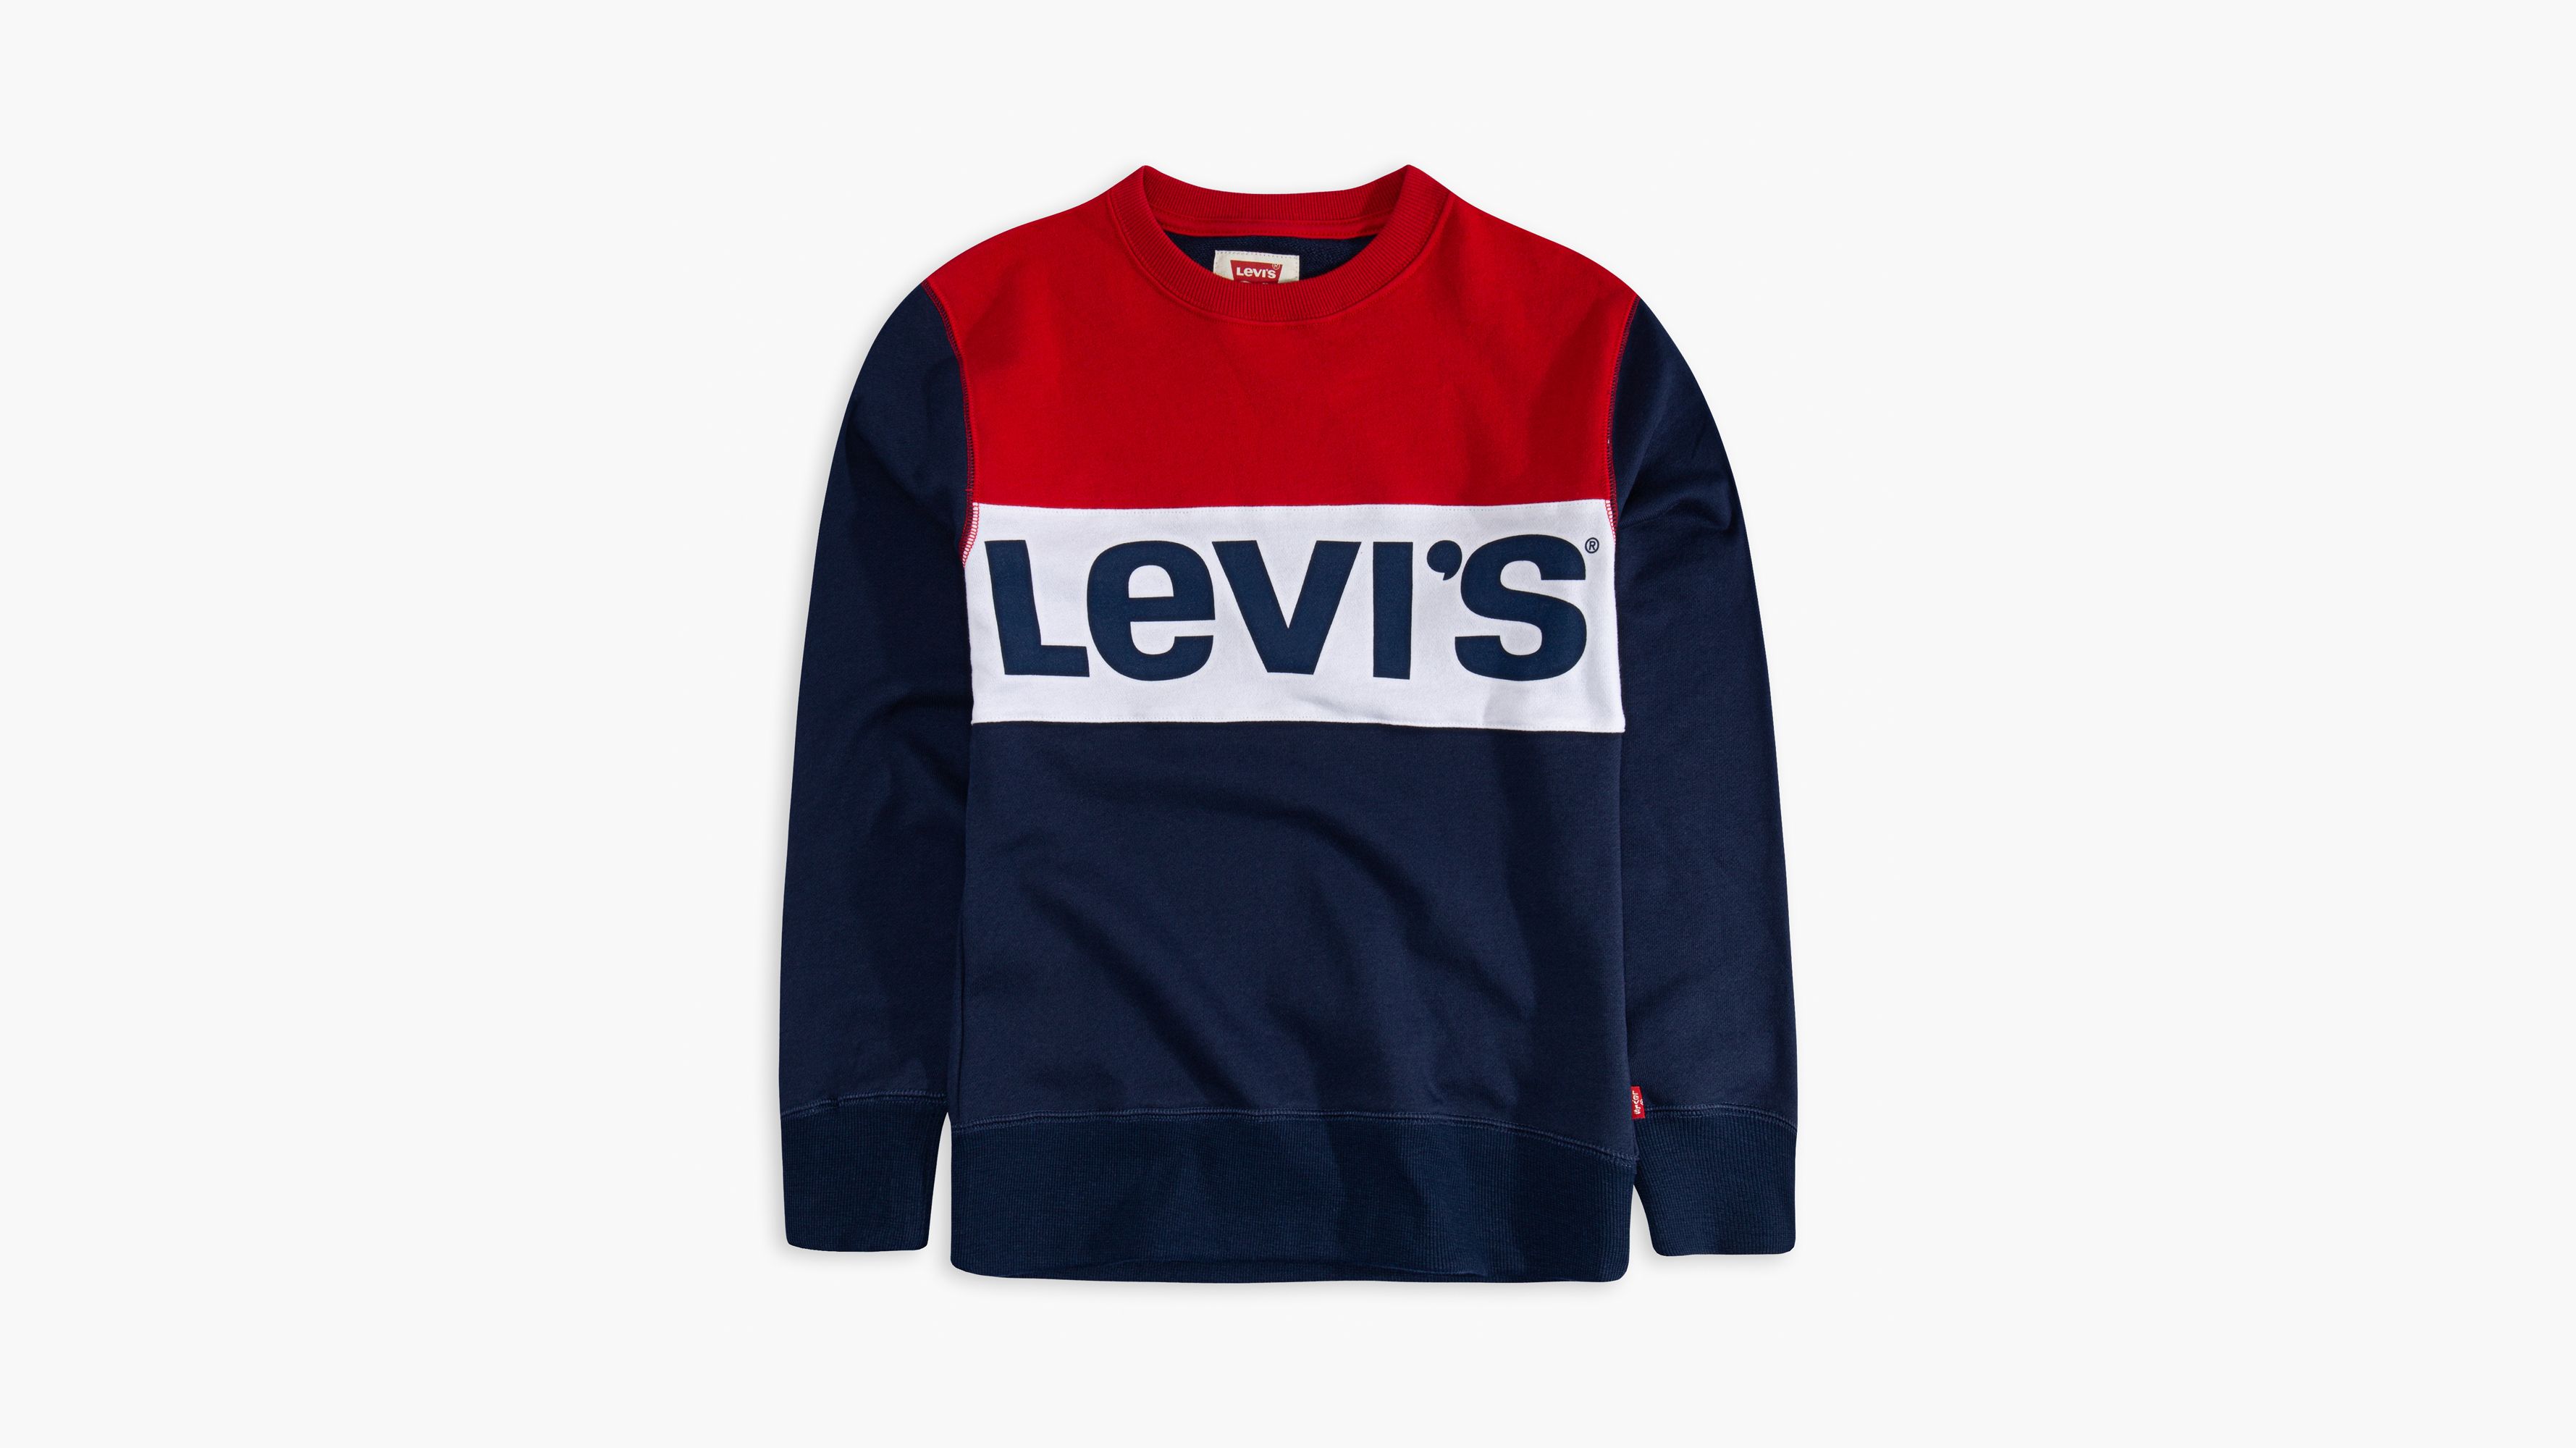 levi's colorblock sweatshirt